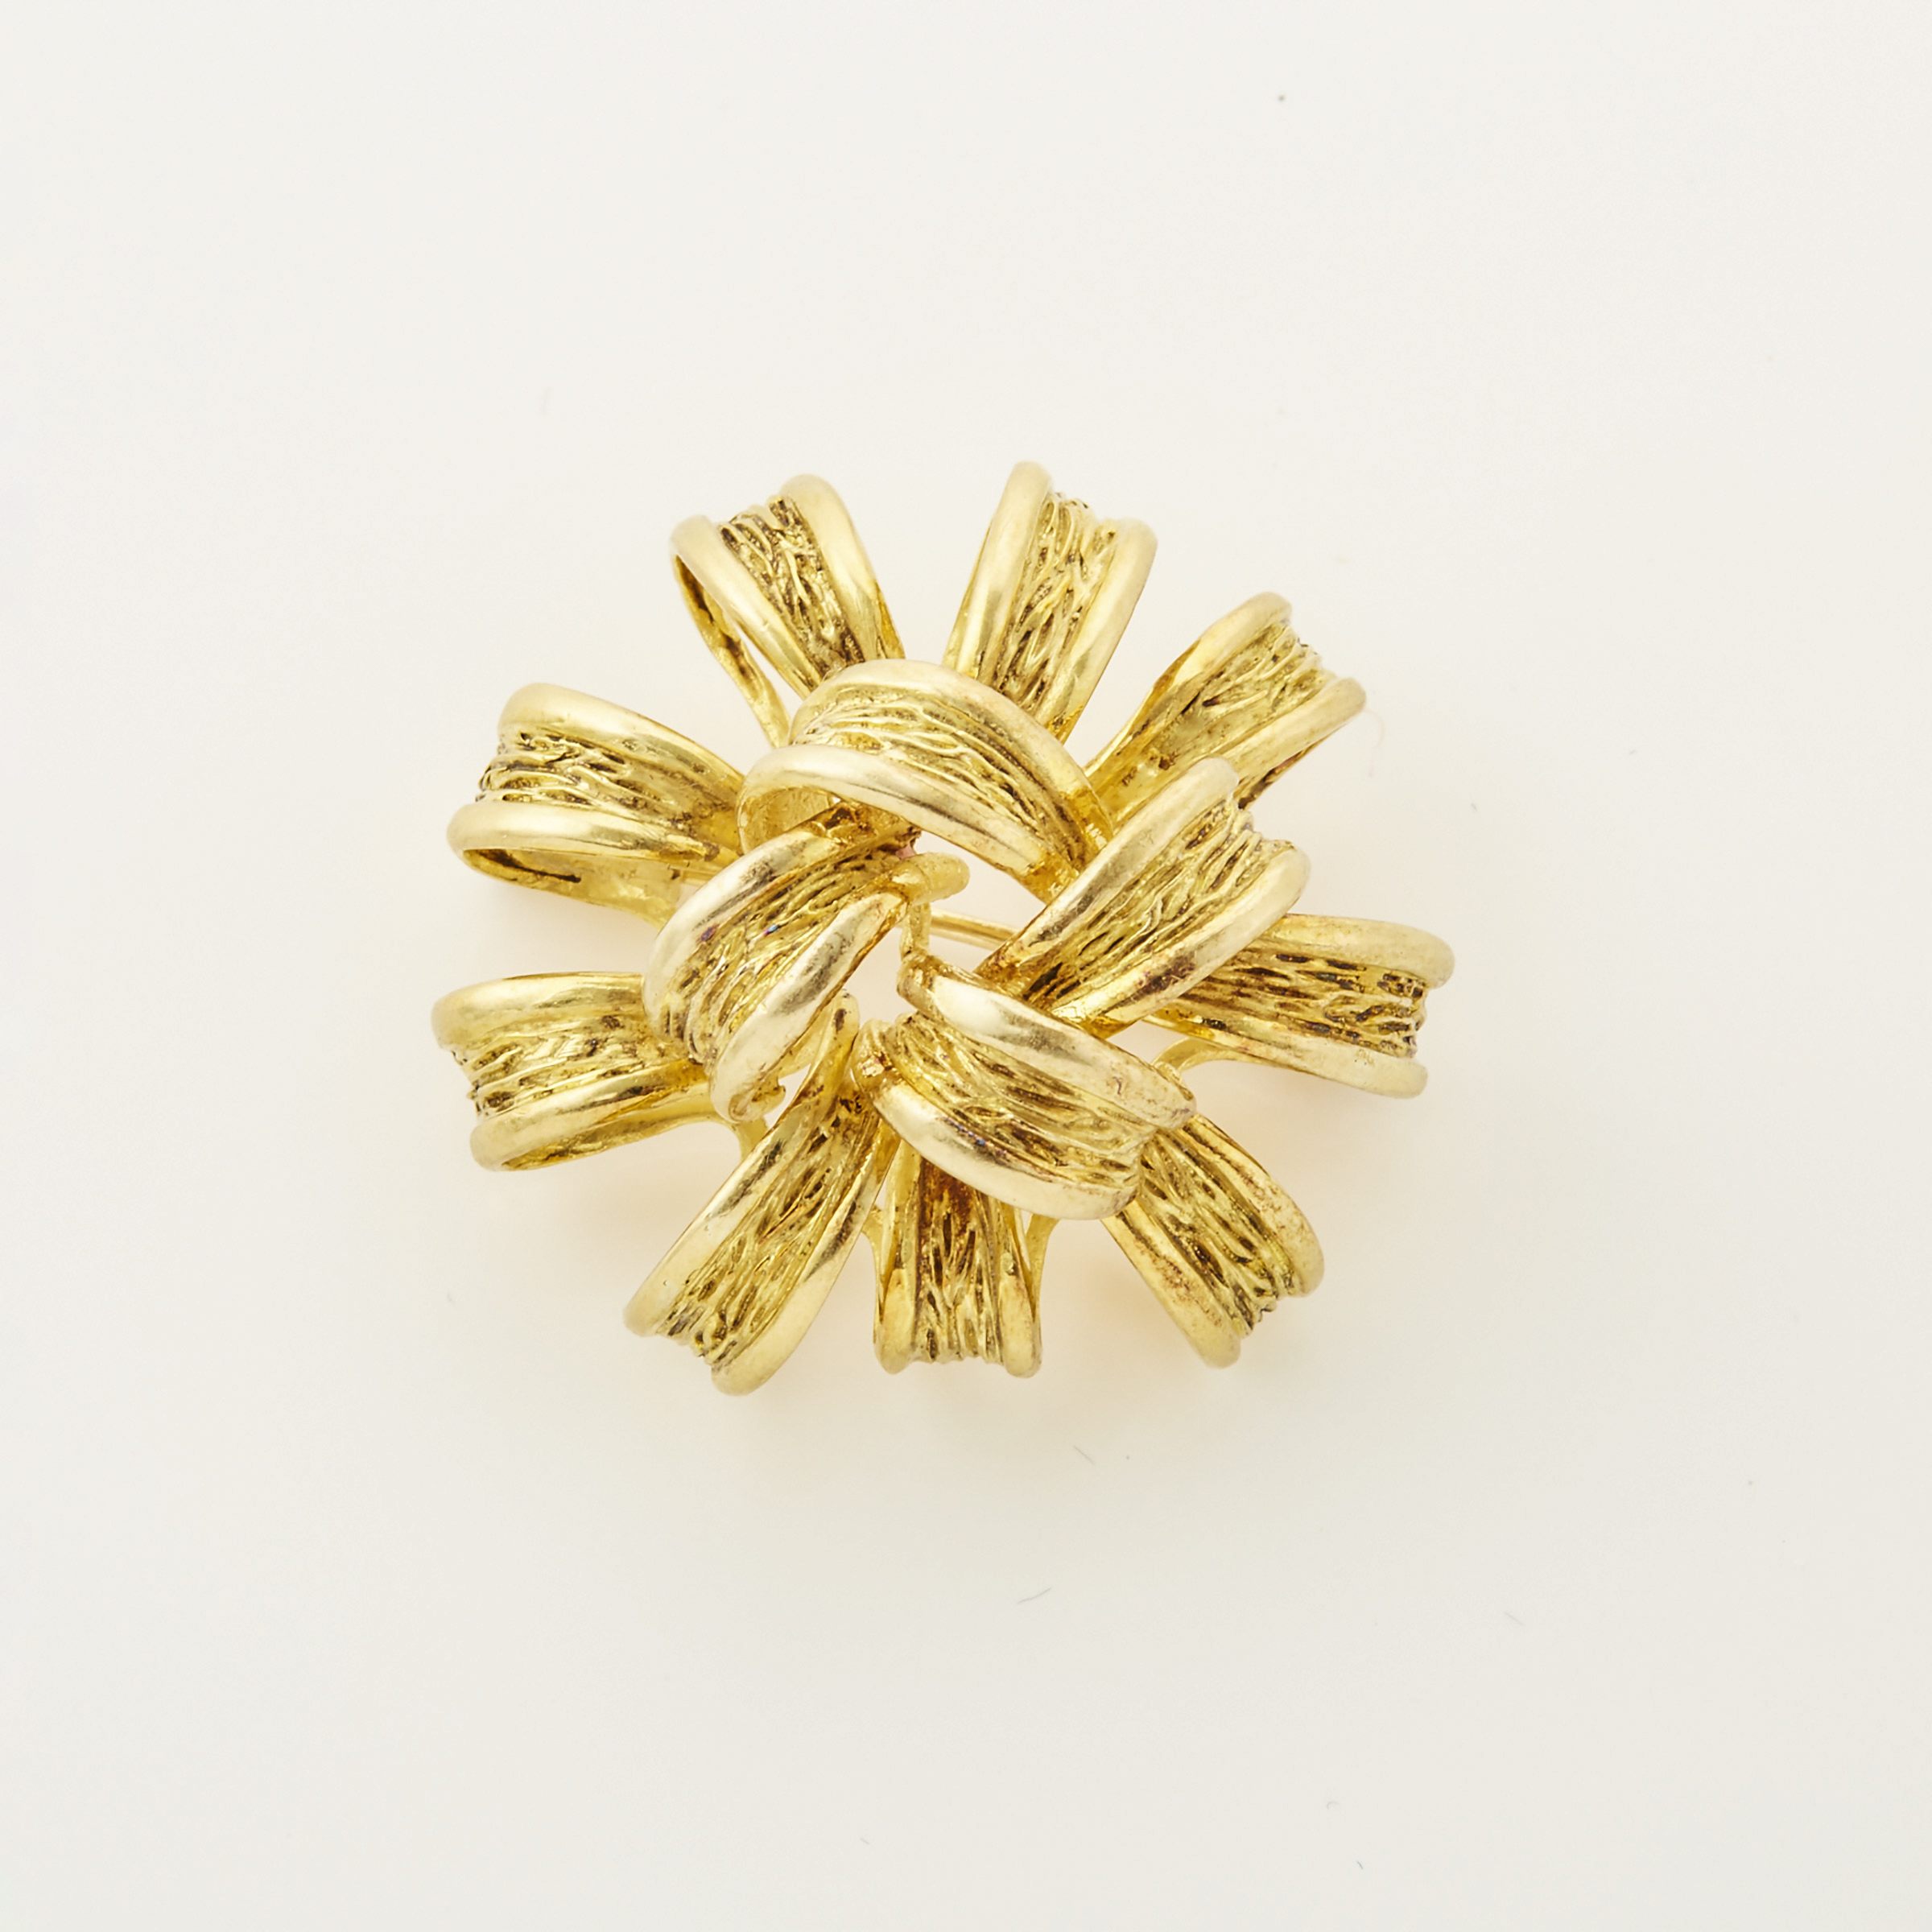 French 18k Yellow Gold Circular Knot Brooch